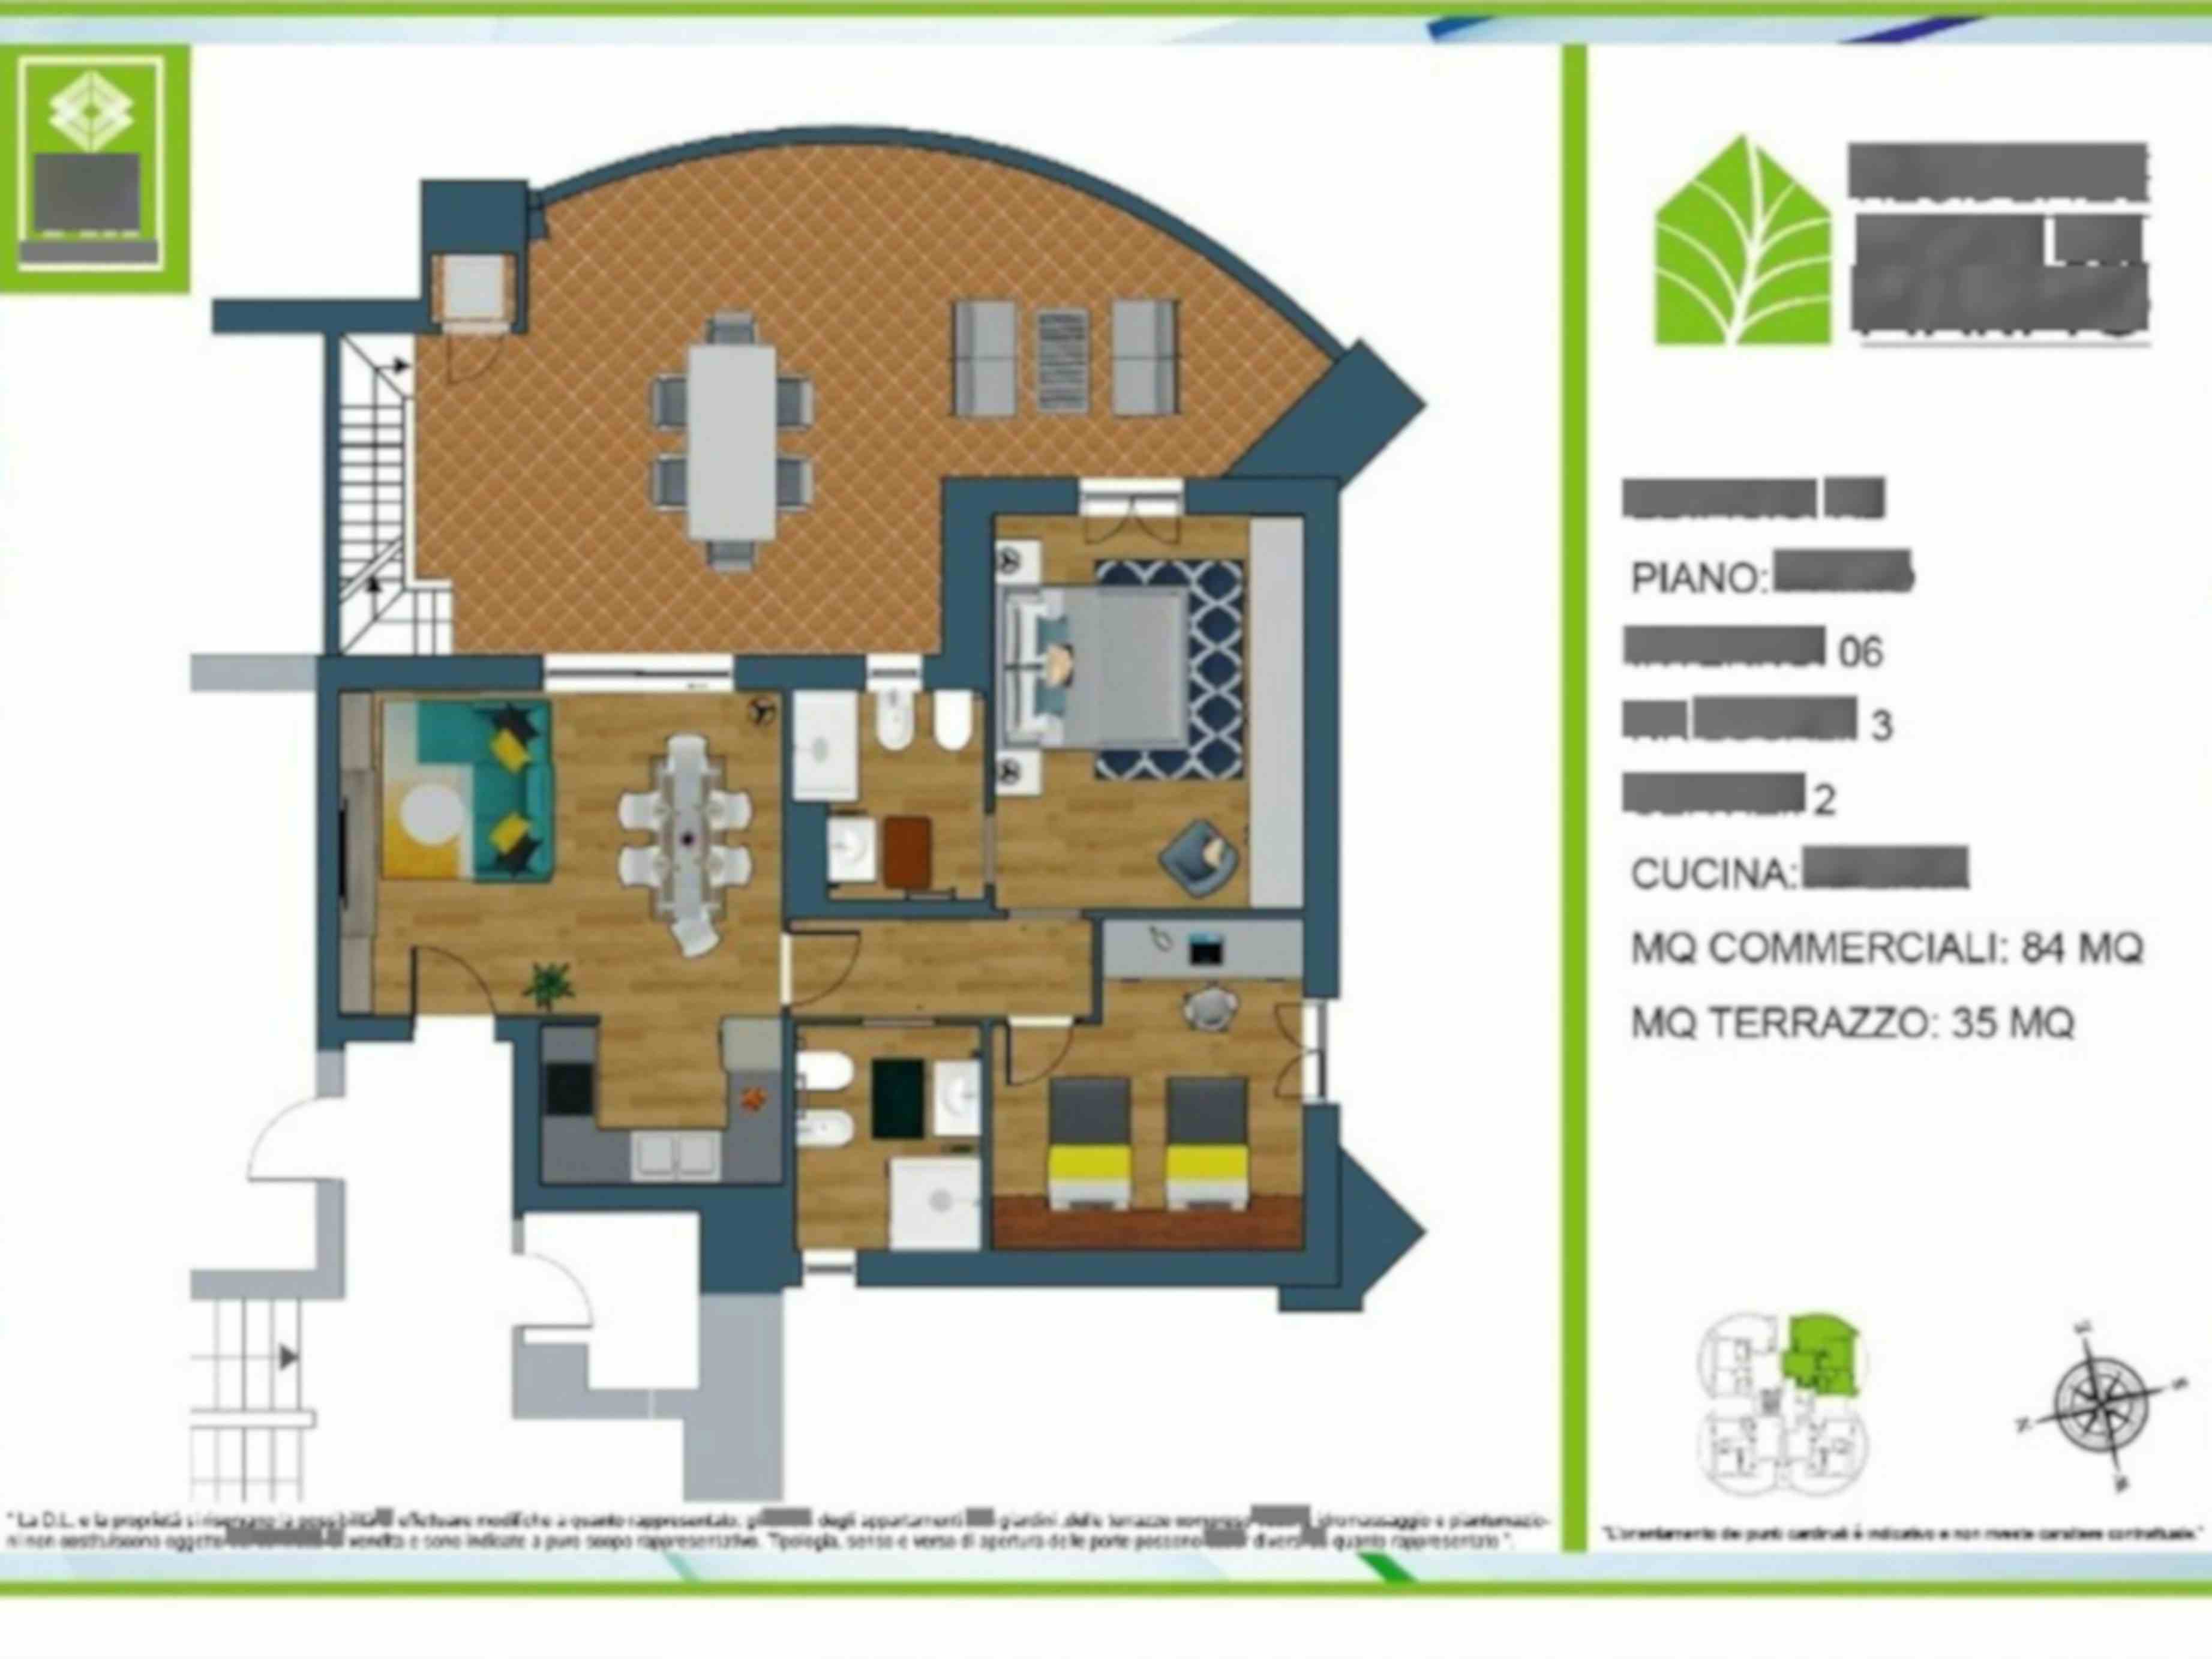 Two-bedroom Apartment of 84m² in Via Monte Del Marmo